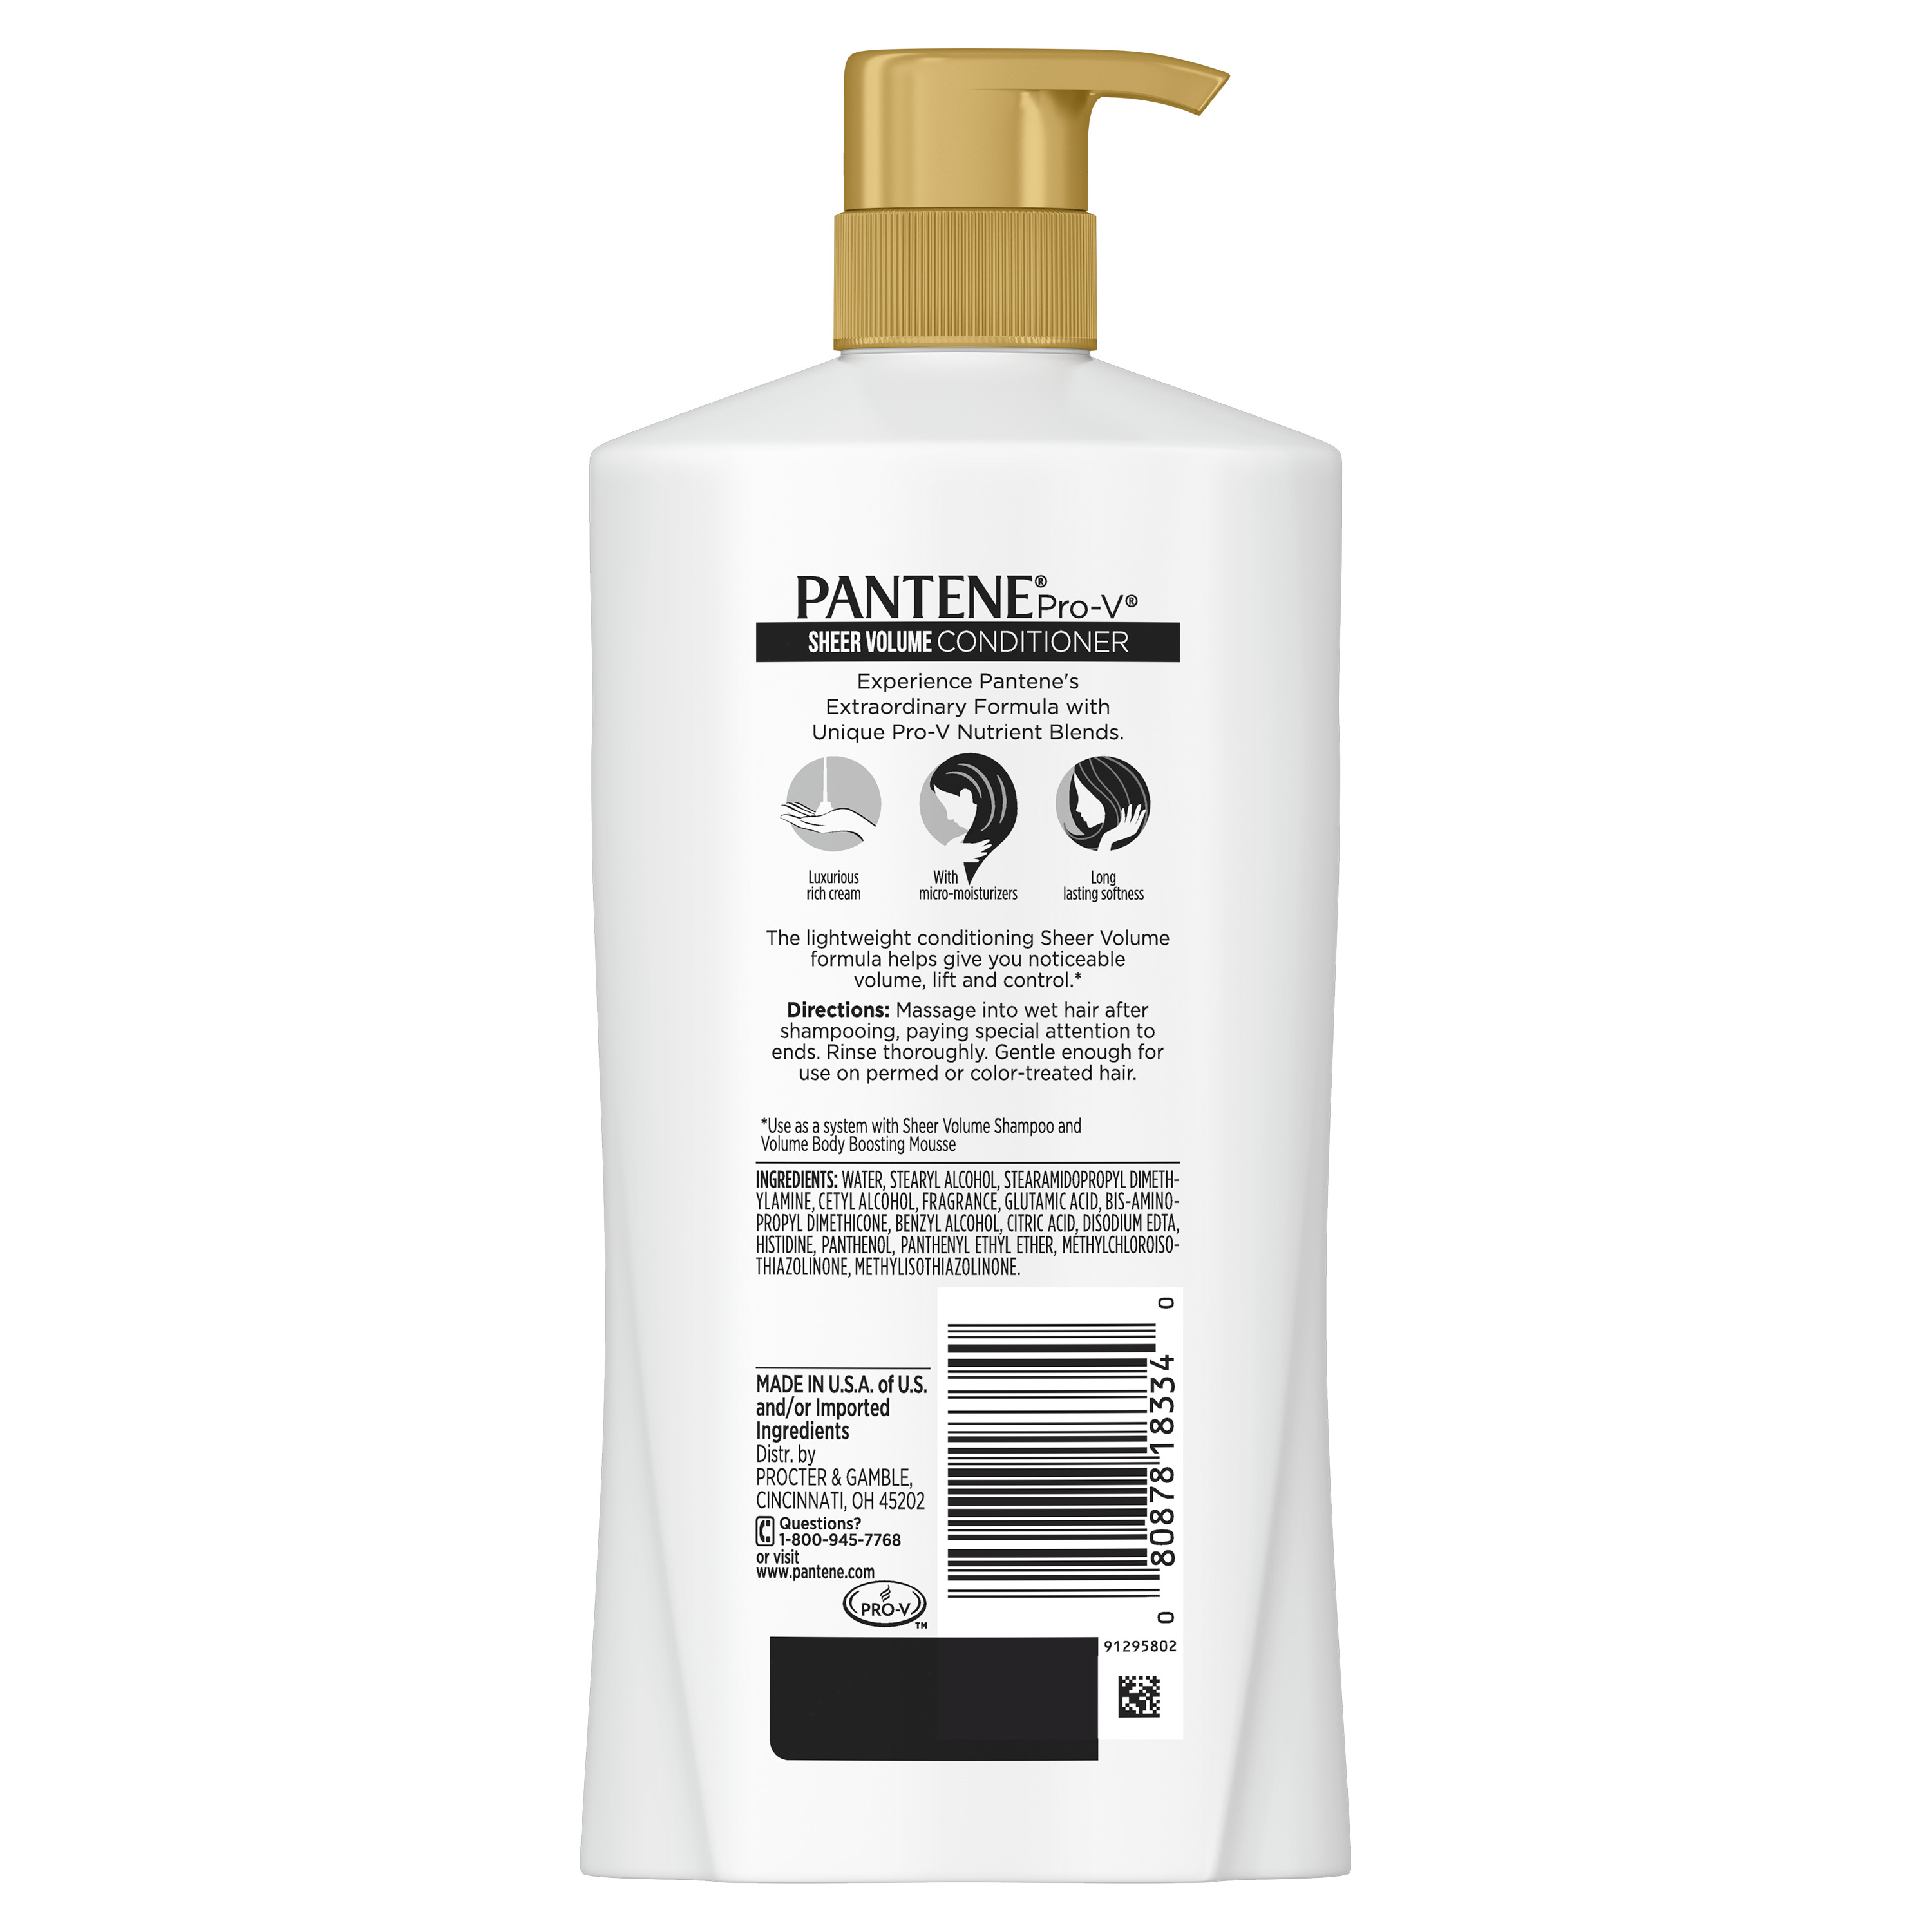 Pantene Pro-V Moisturizing nourishing Sheer Volume for Thin Hair Daily Conditioner, 28.9 fl oz - image 2 of 7